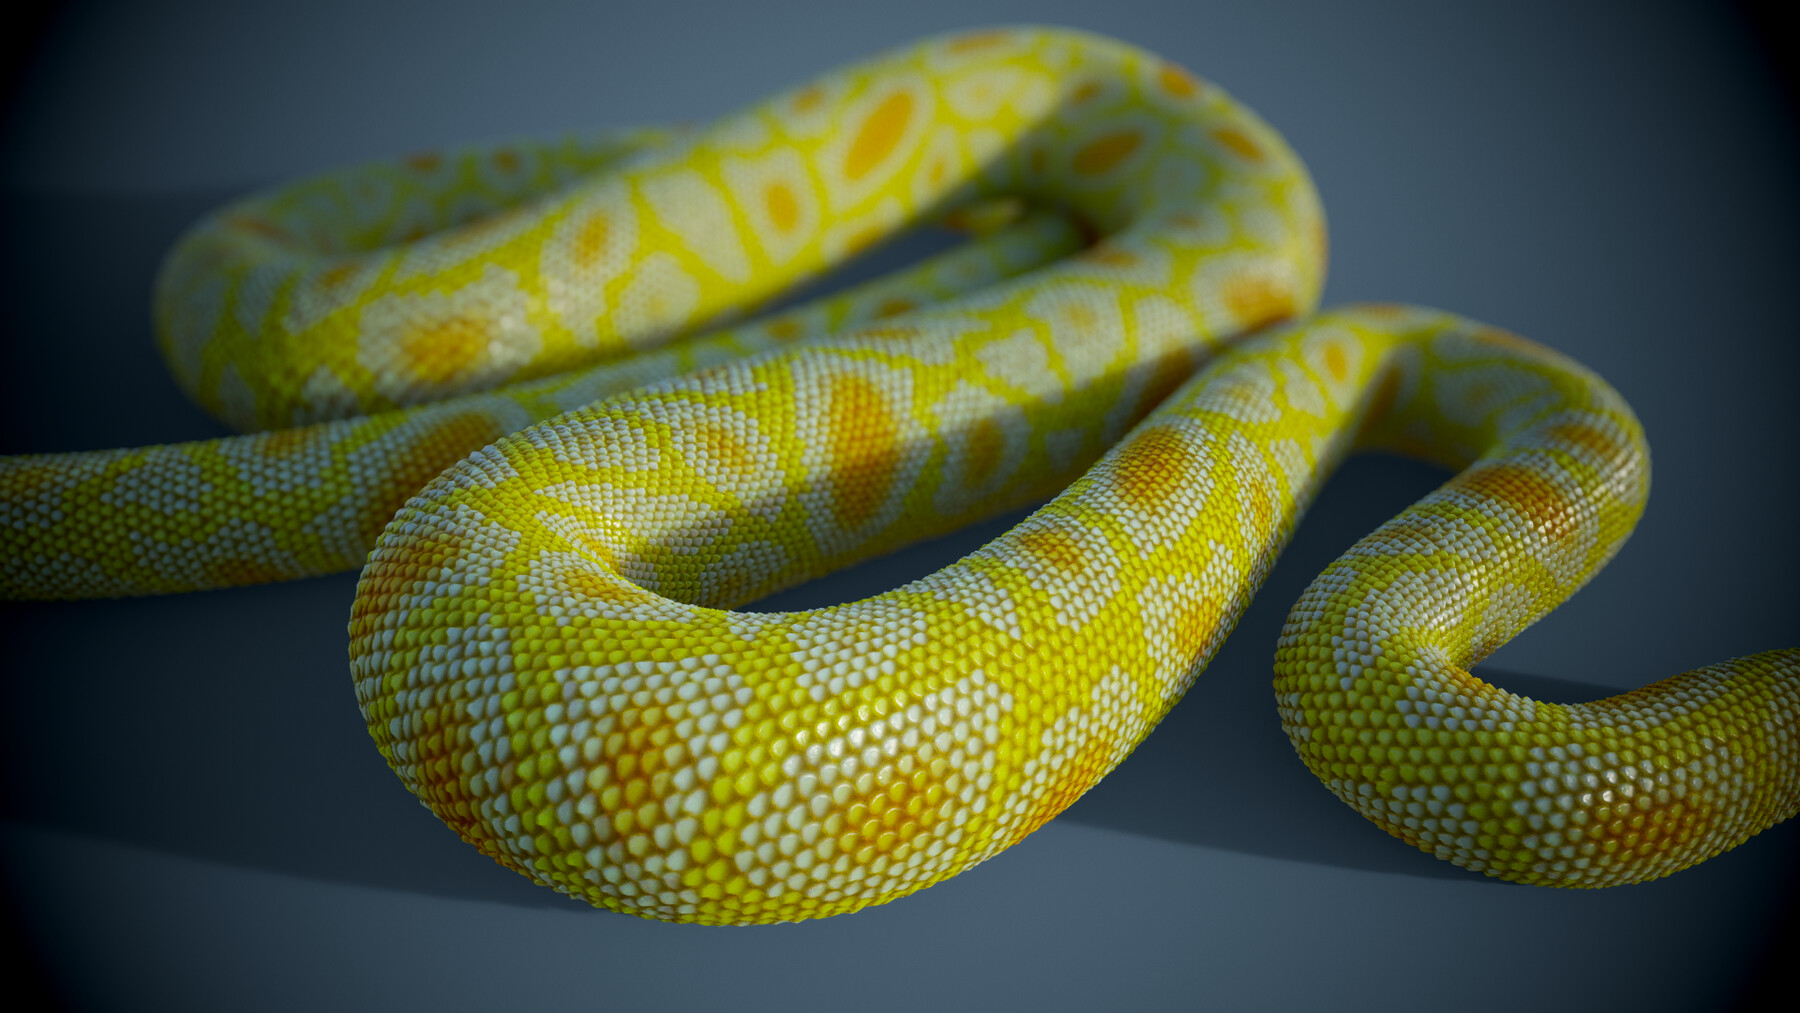 Creating Procedural Snakes in Substance Designer